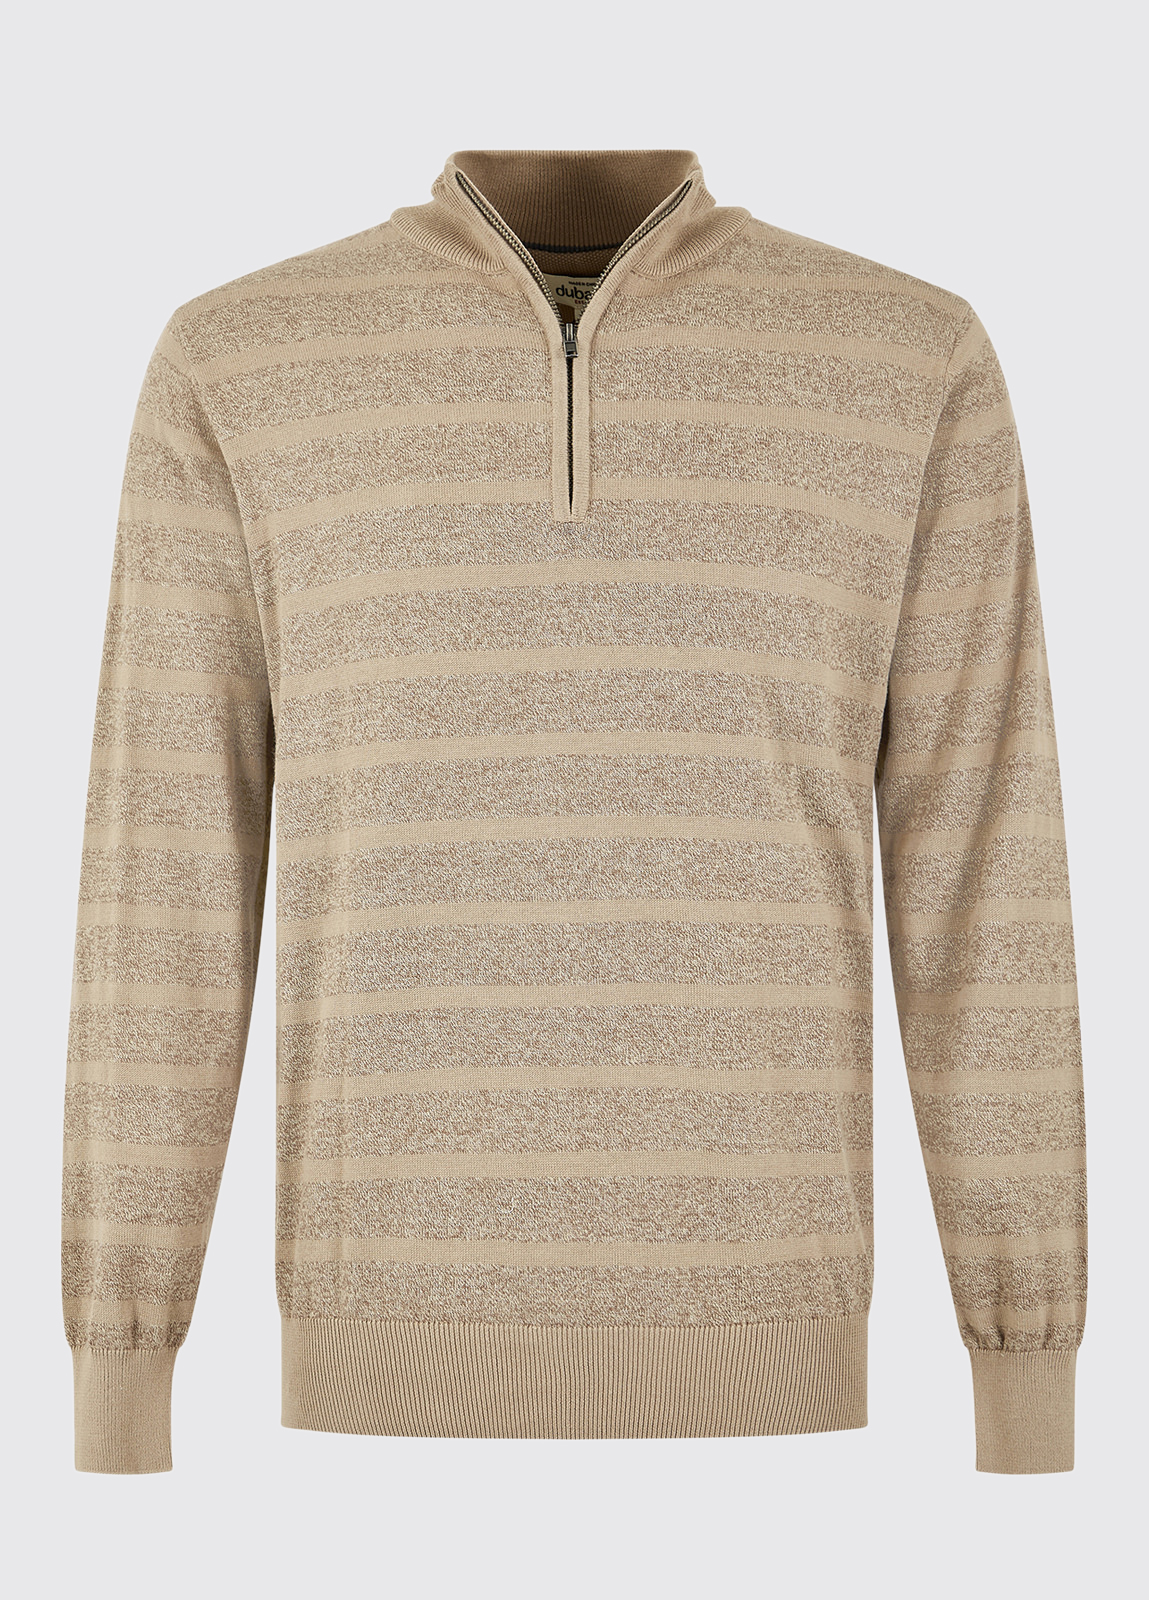 Abbeyville Sweater - Tan Multi